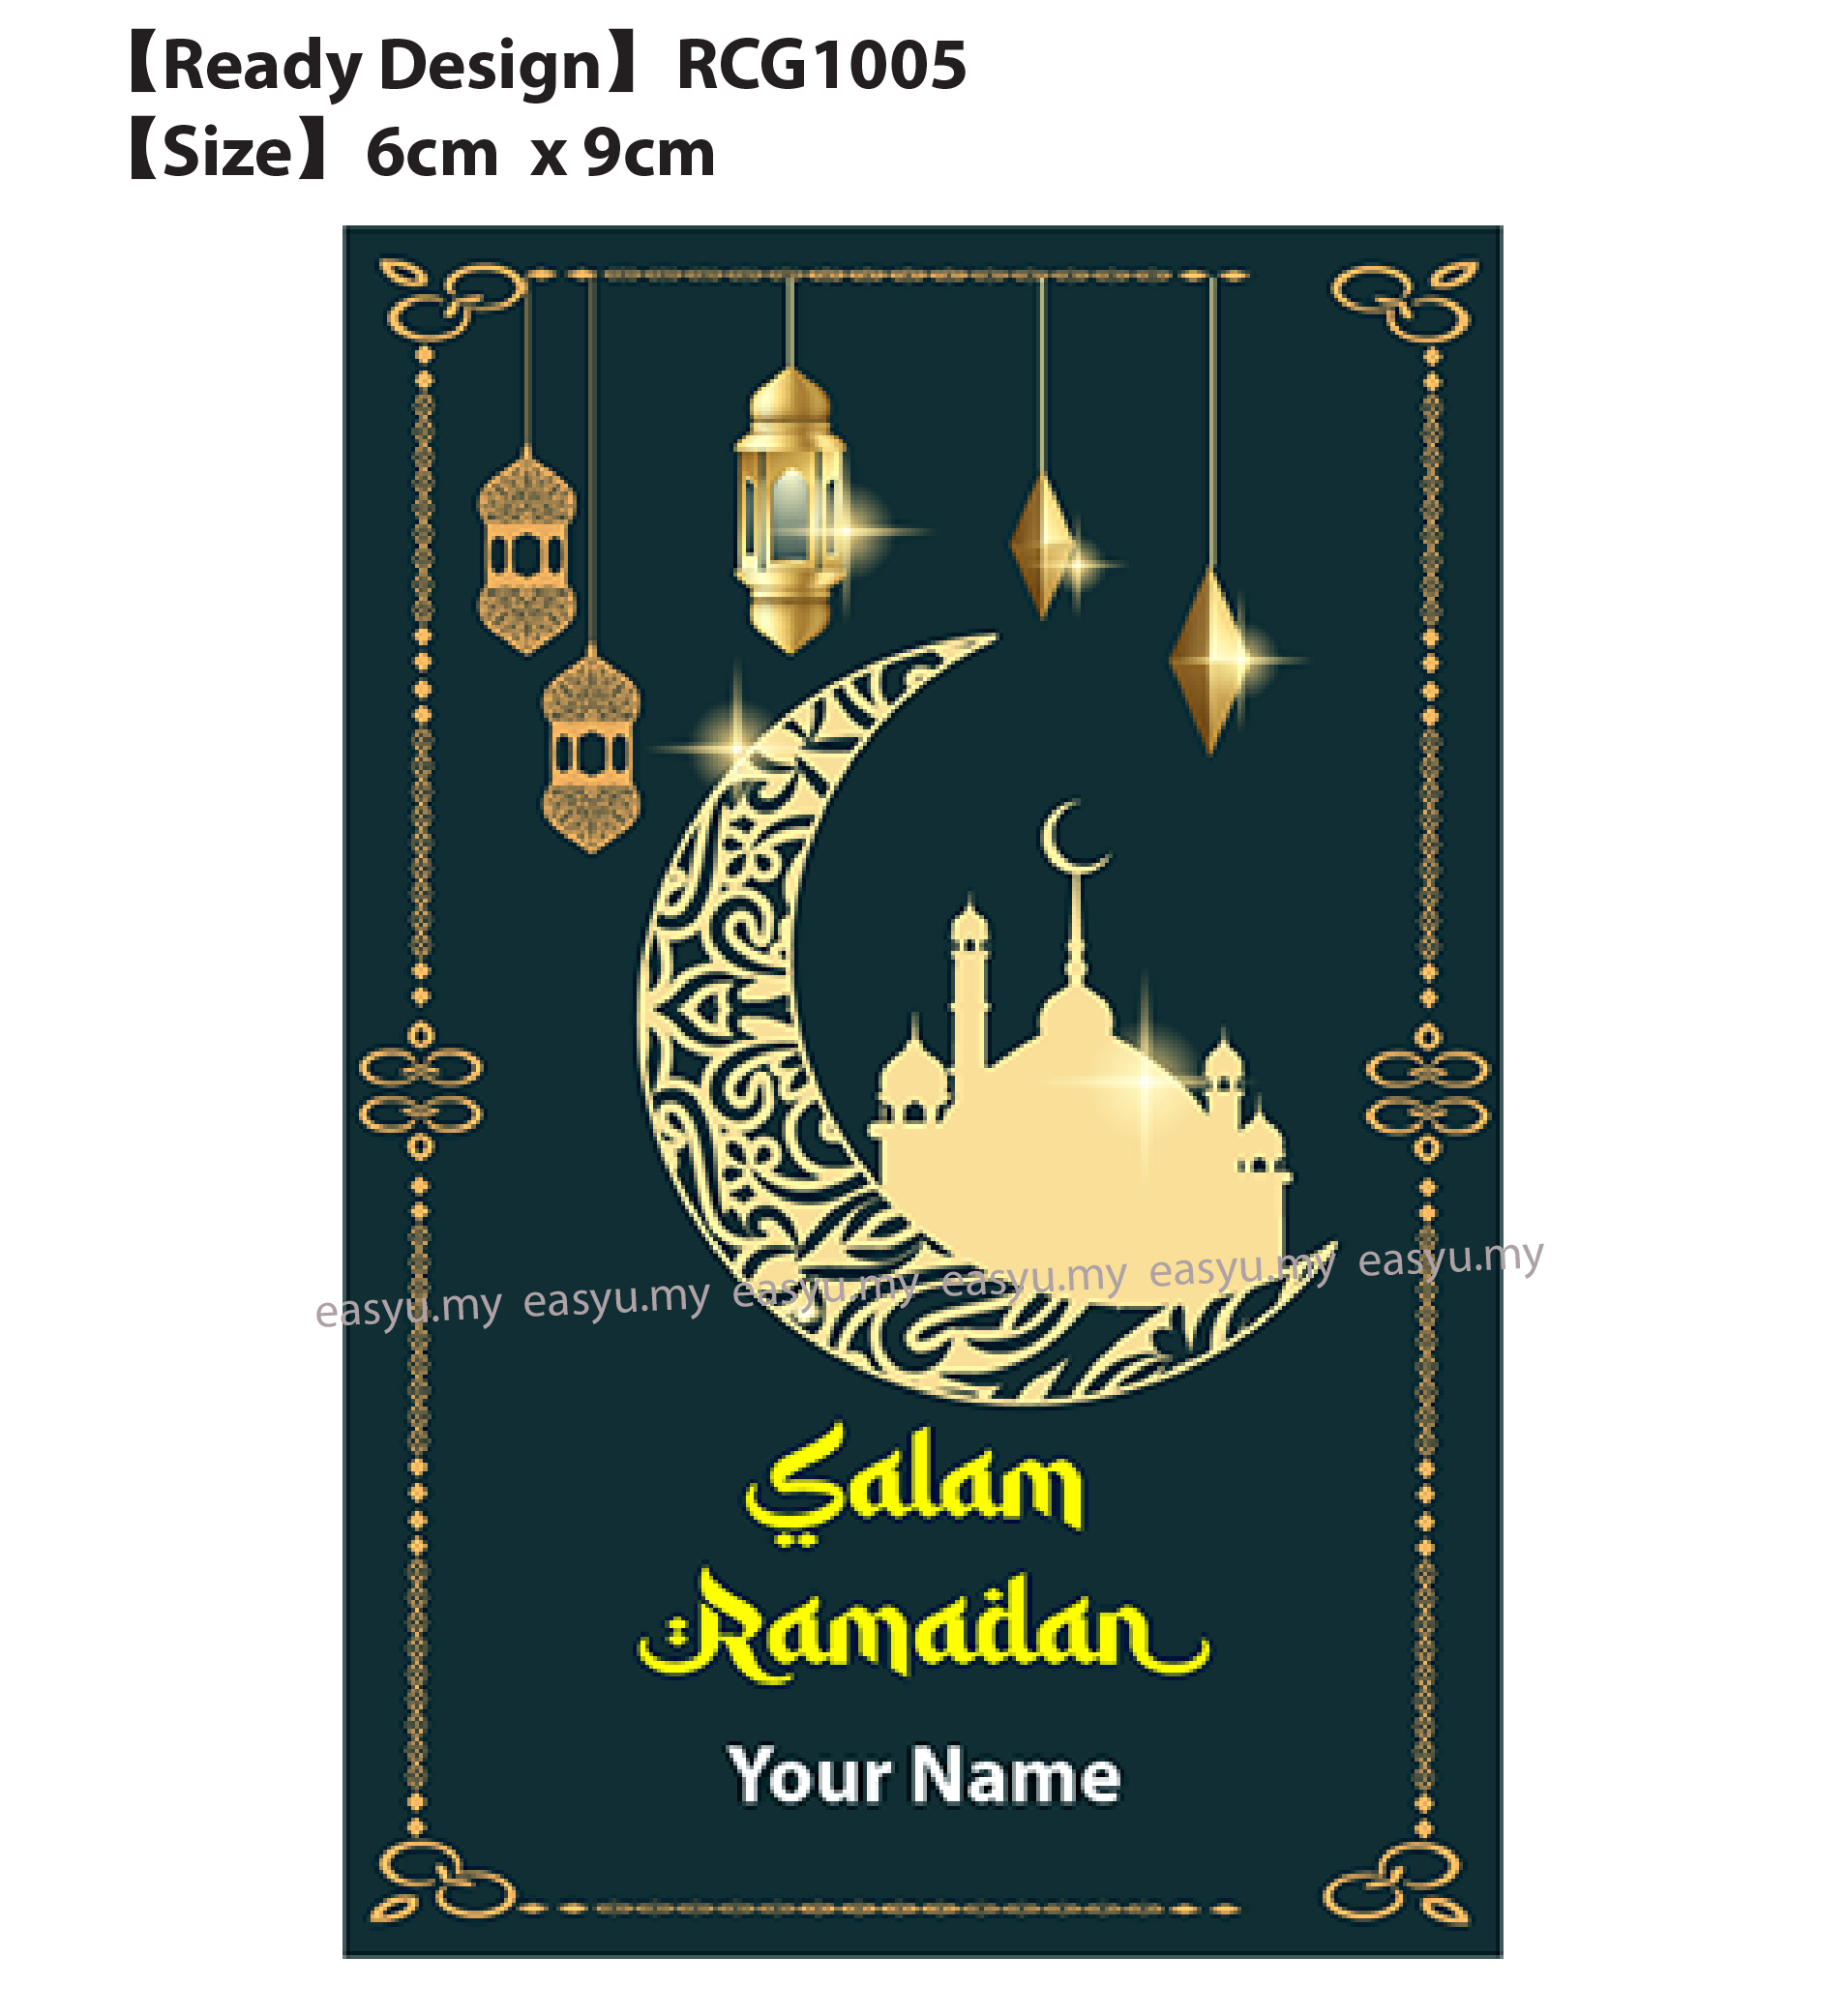 Ramadan greeting gift card Printing Online selangor petaling jaya KL Klang Valley Malaysia